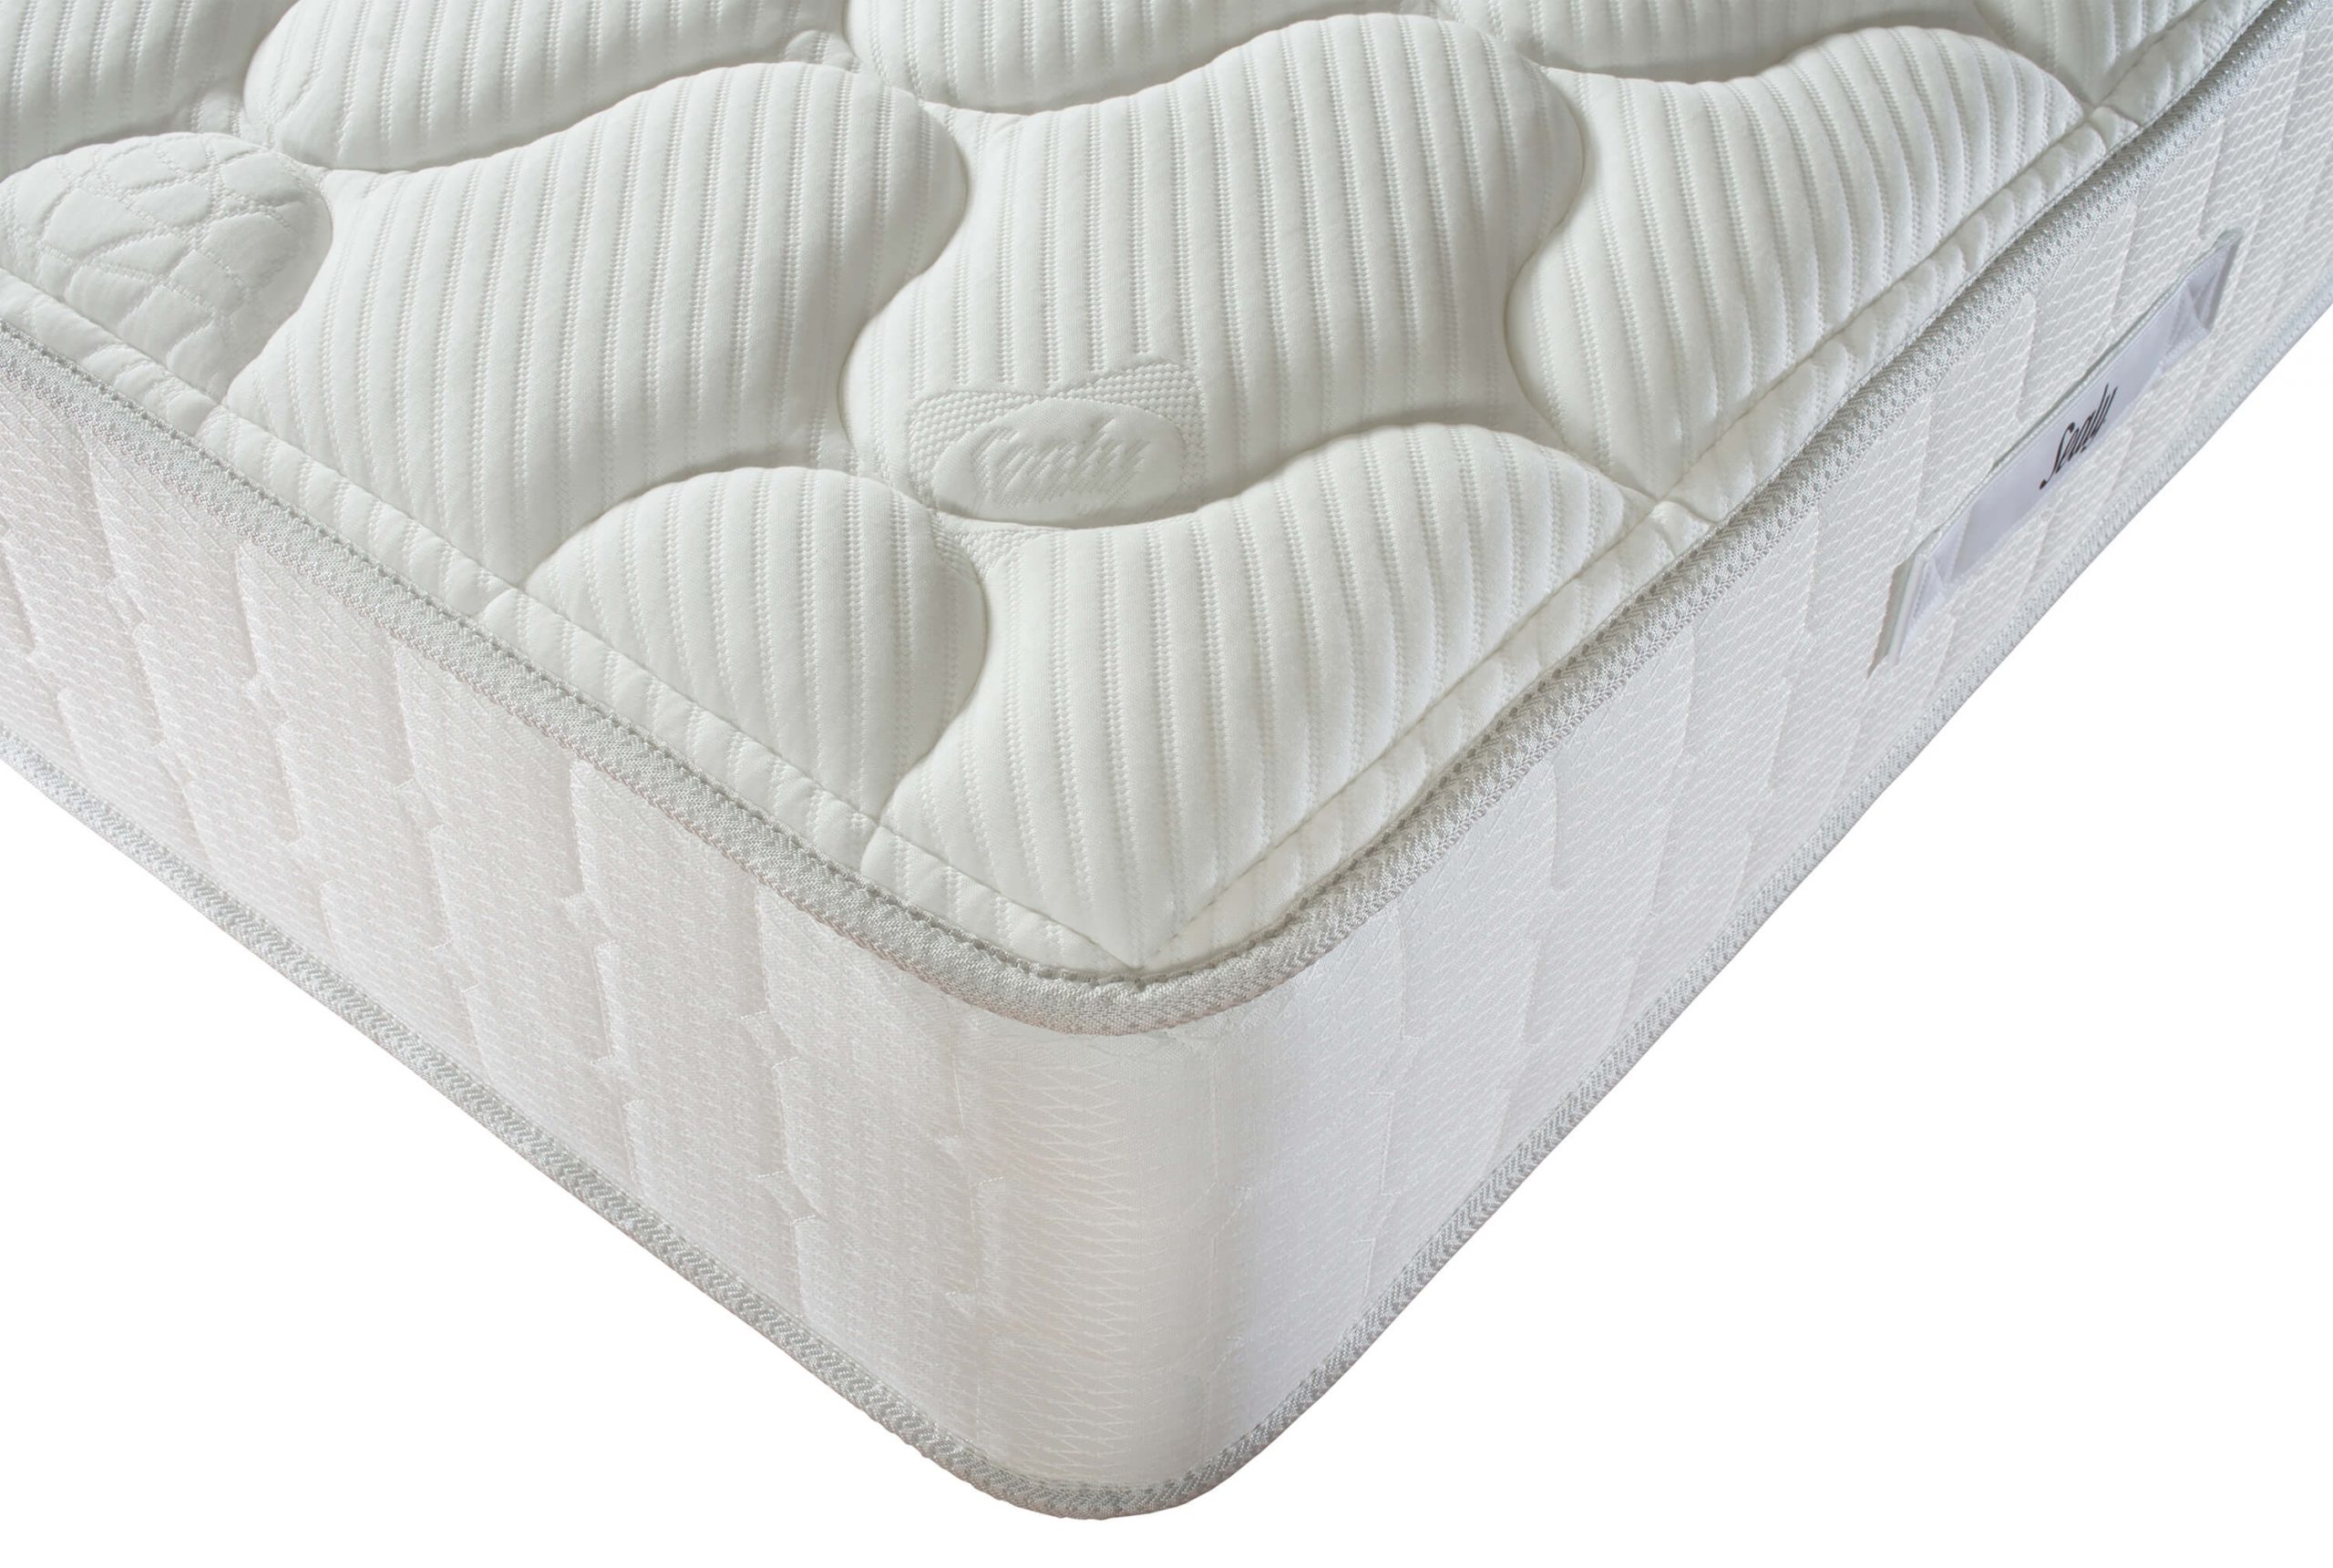 sealy napoli 1200 super king mattress